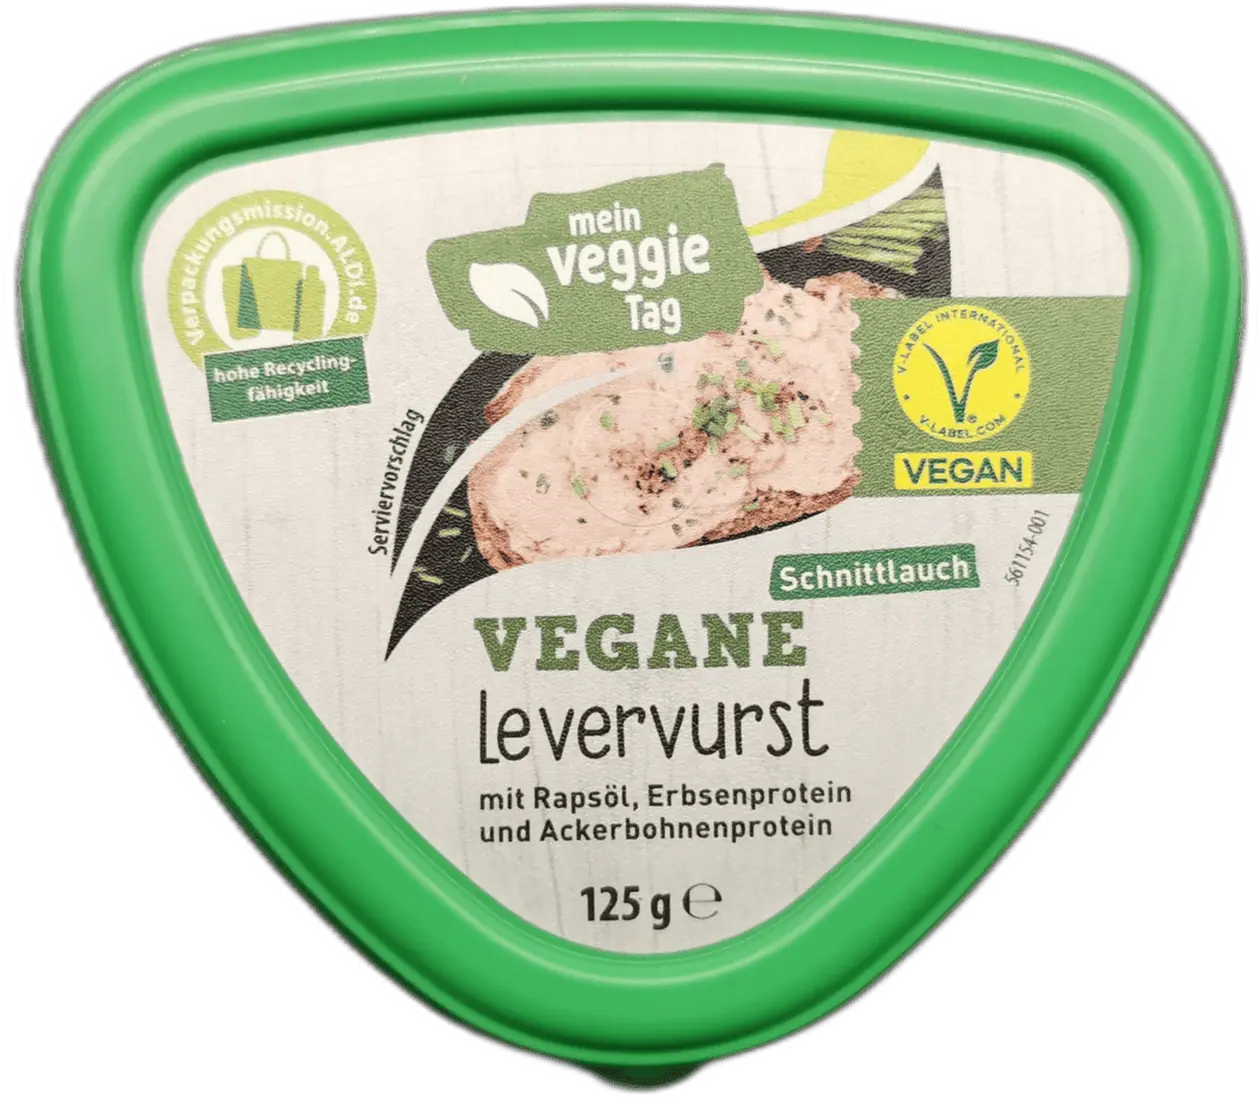 Neu bei Aldi: 3x Mein Veggie Tag vegane Leberwurst / Levervurst